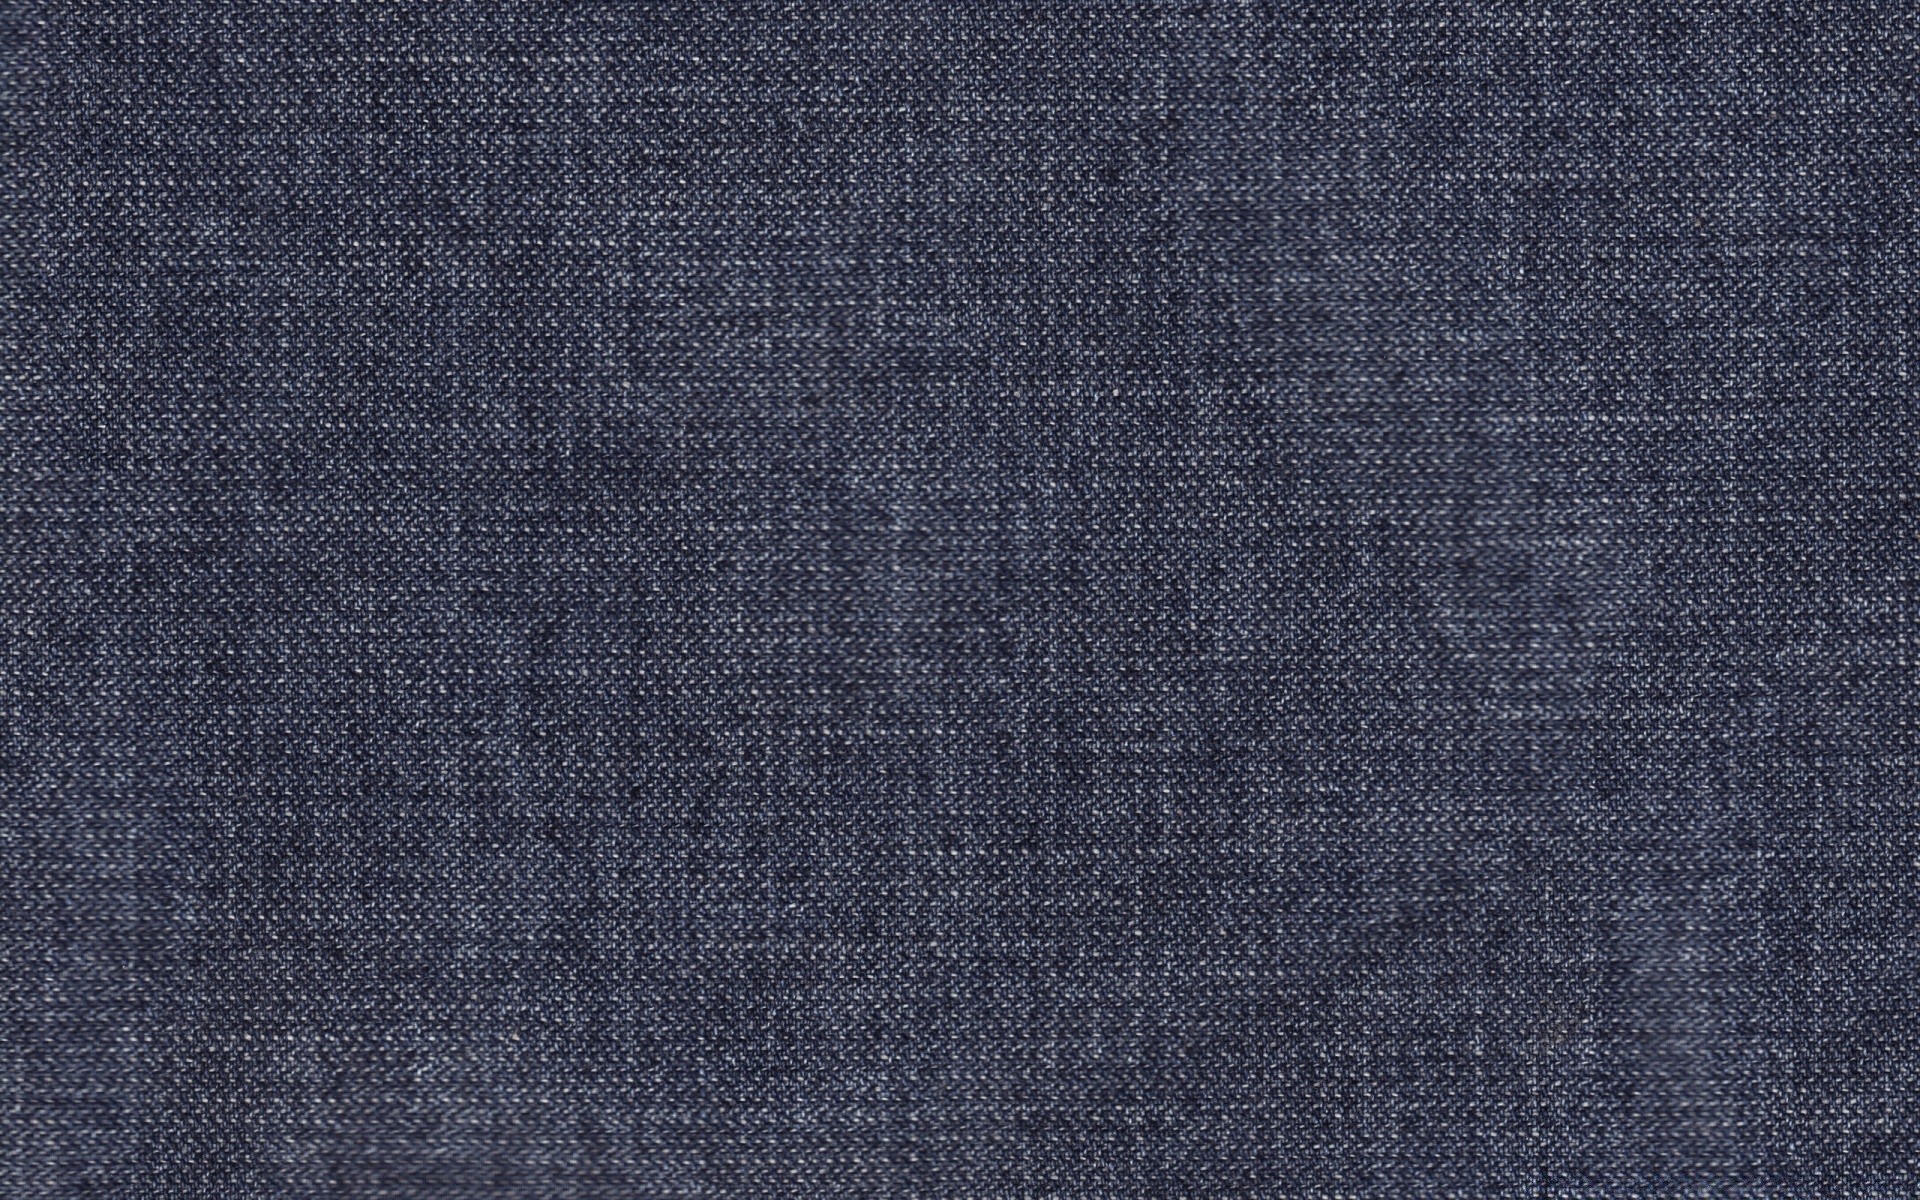 texture fabric cotton canvas textile desktop background linen pattern wear abstract rough fiber pants thread weaving wallpaper stitch design surface